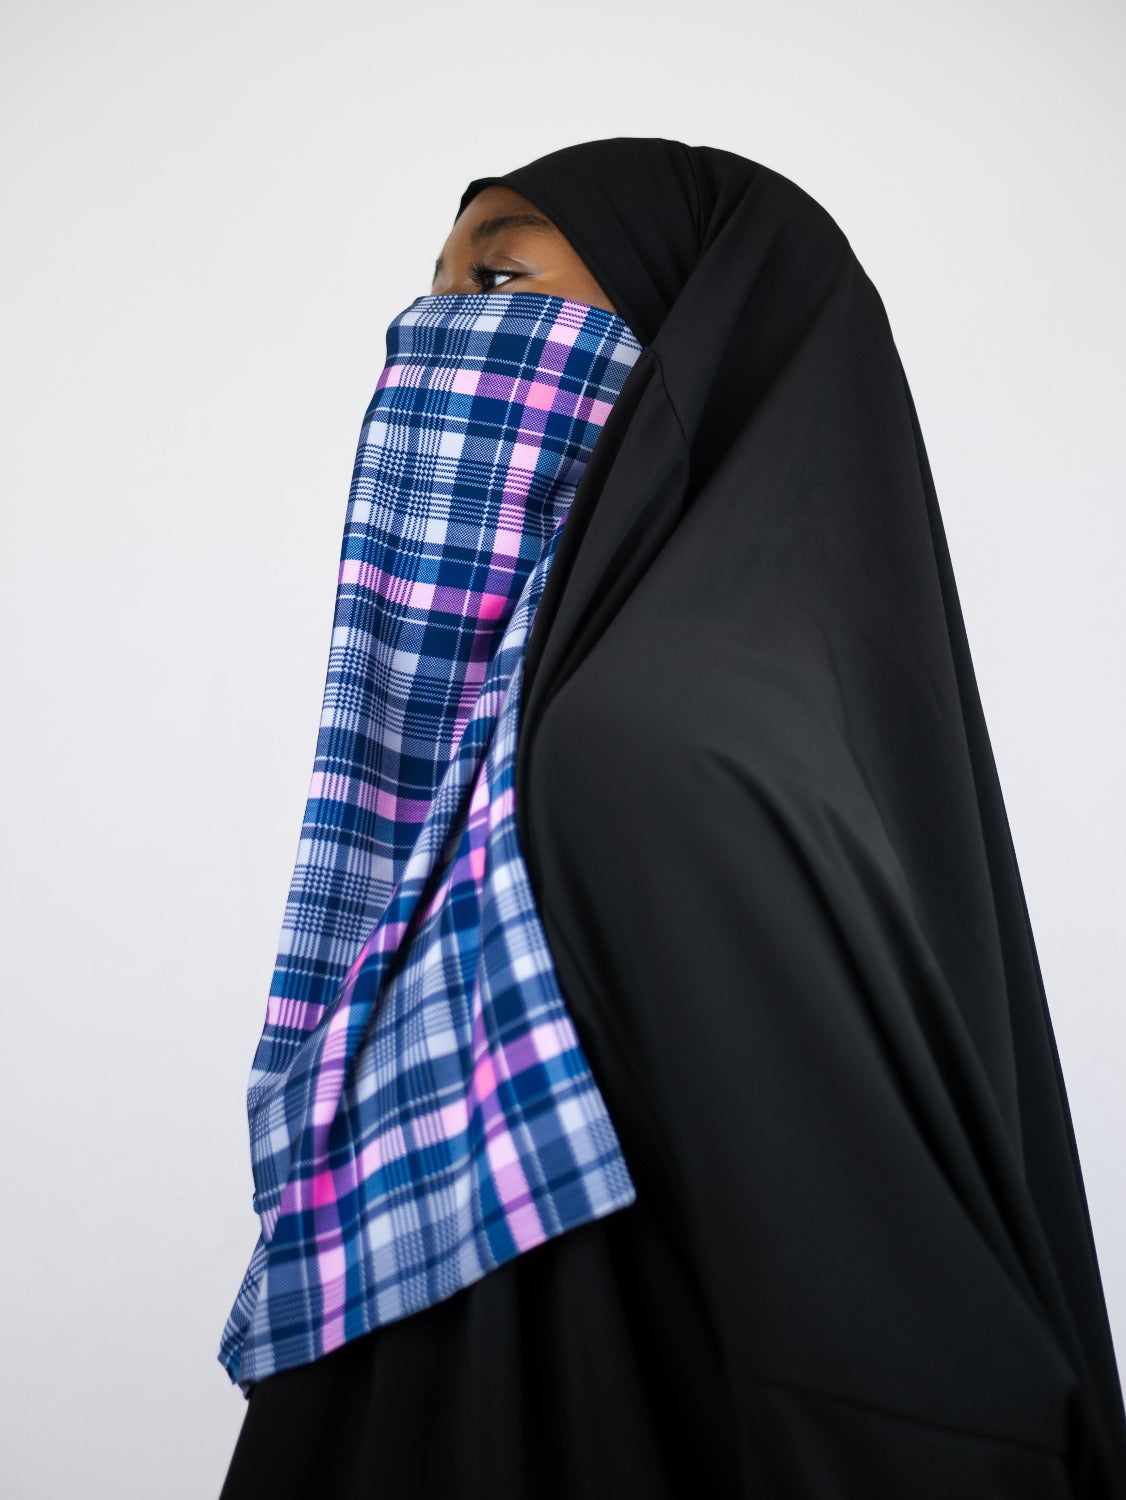 Diadem Chiffon Niqab, School Girl